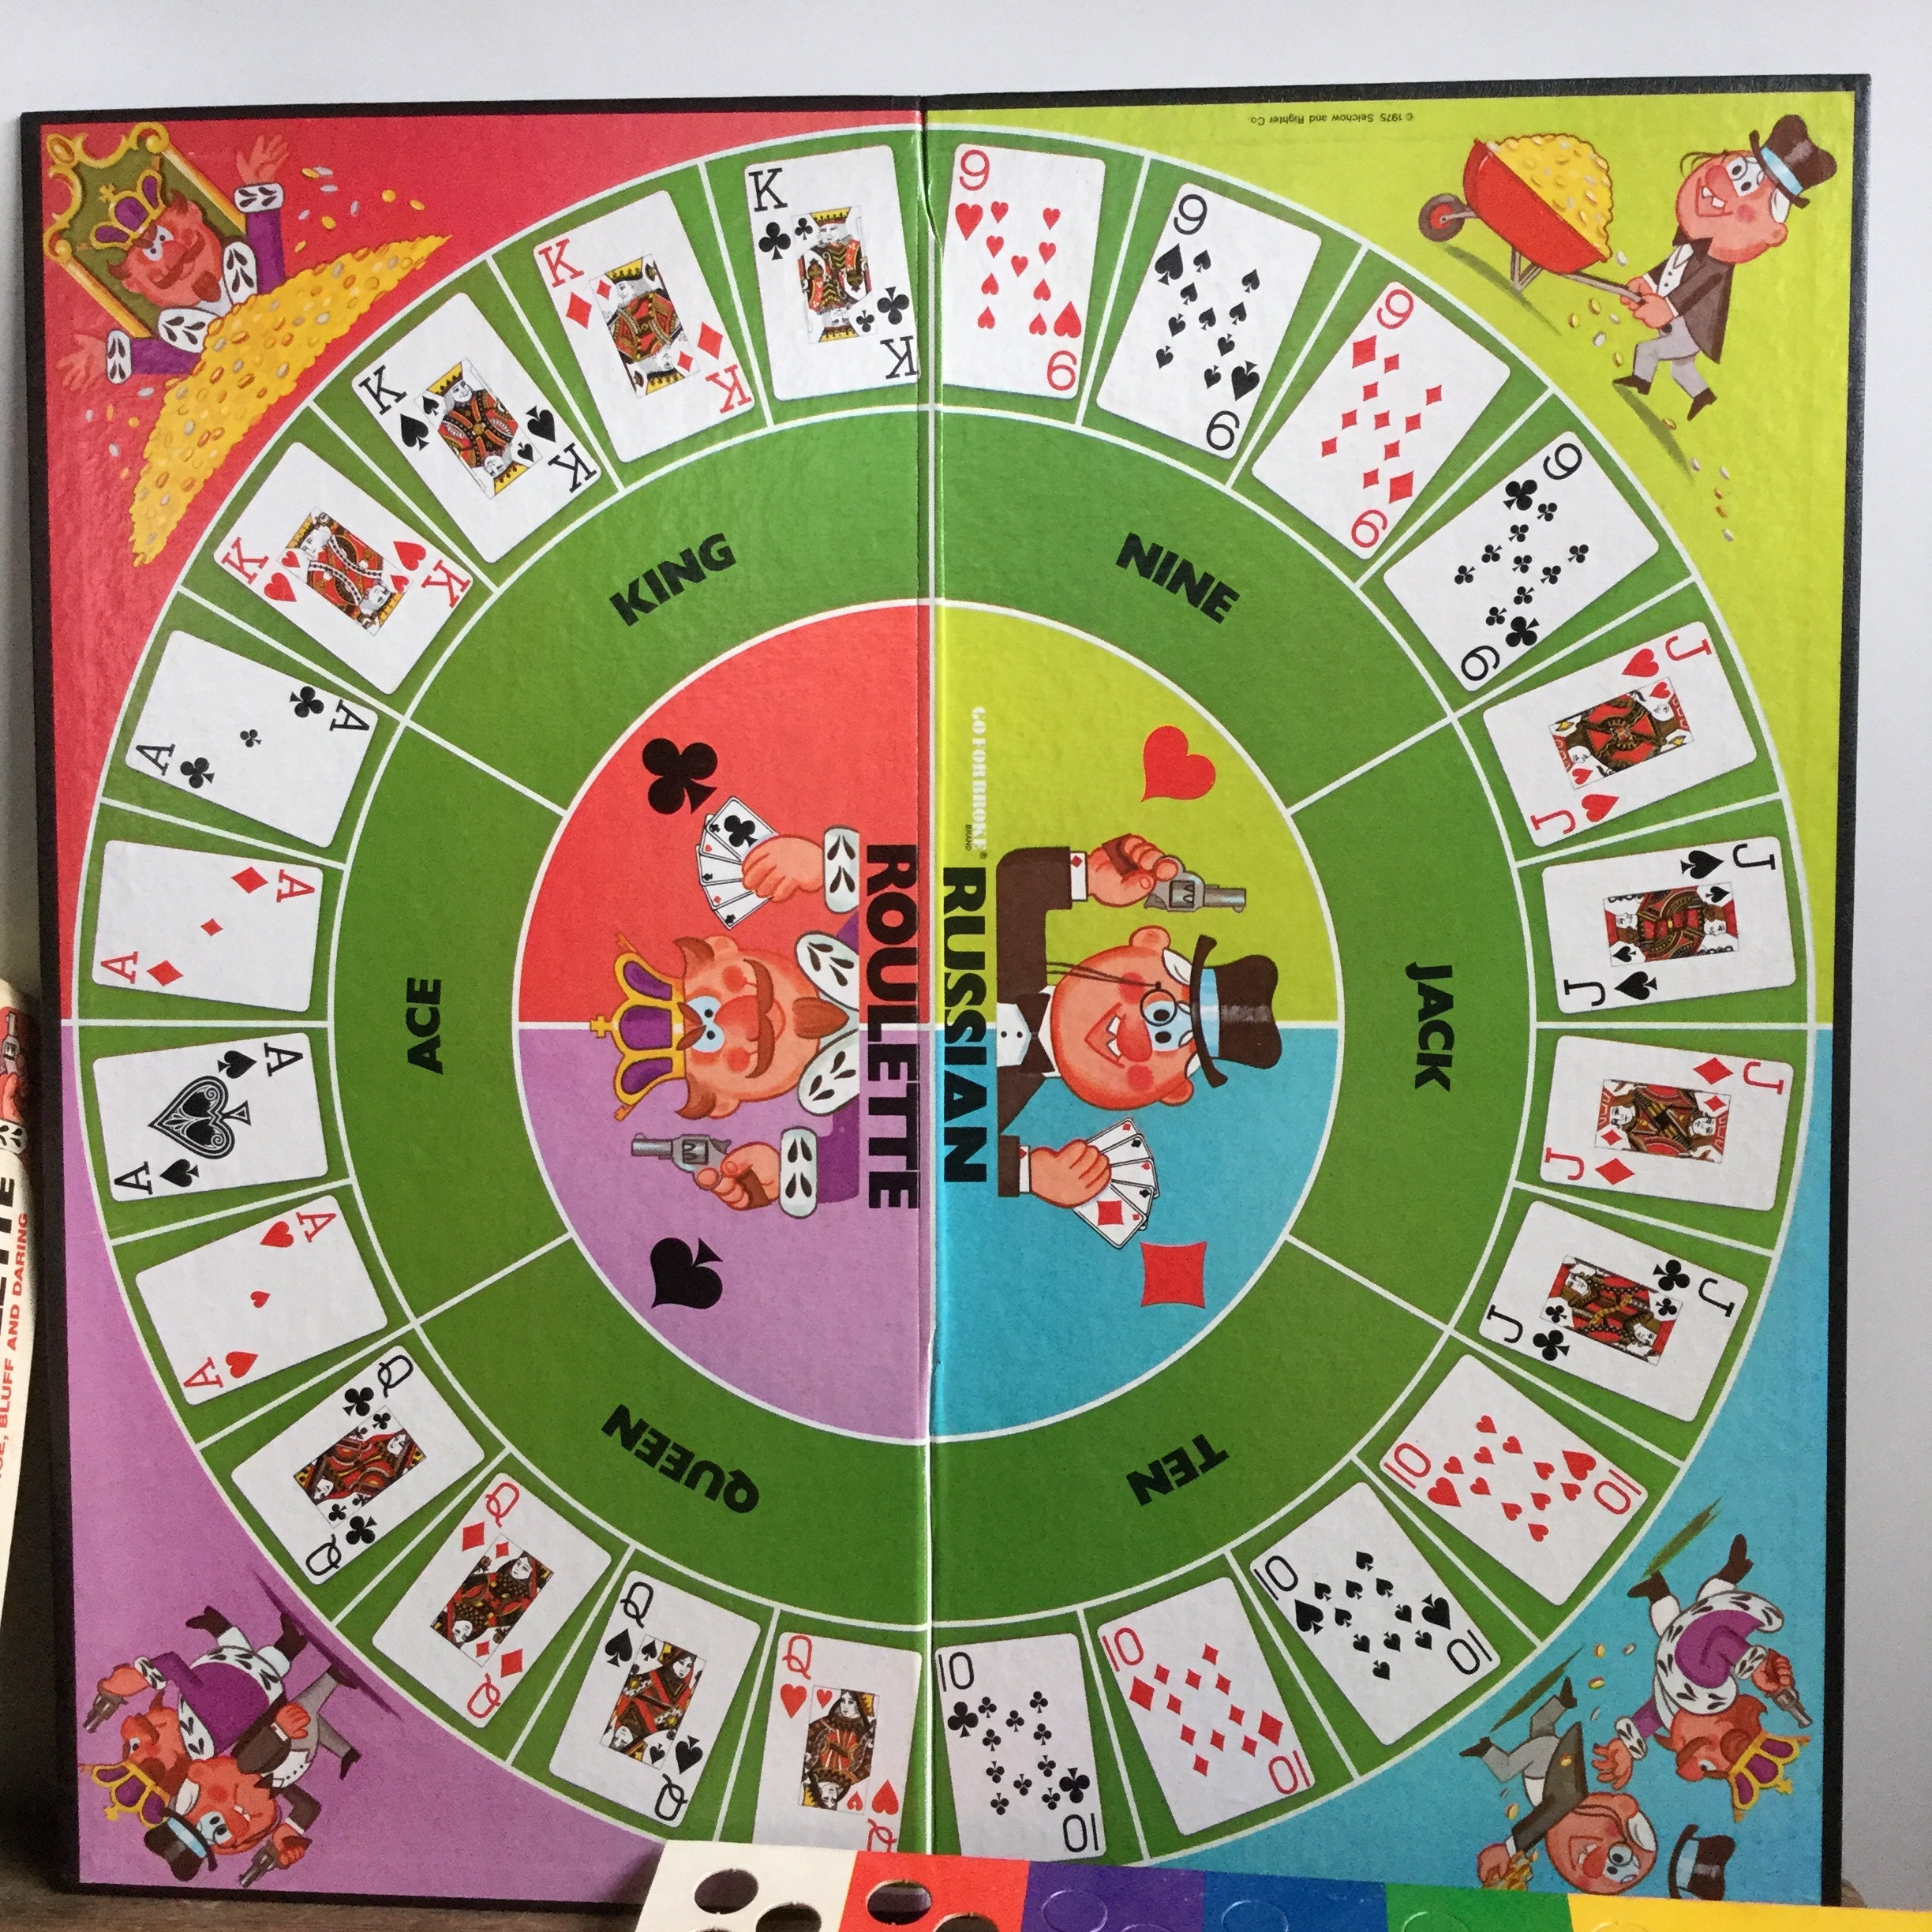 Russian Roulette Board Game 